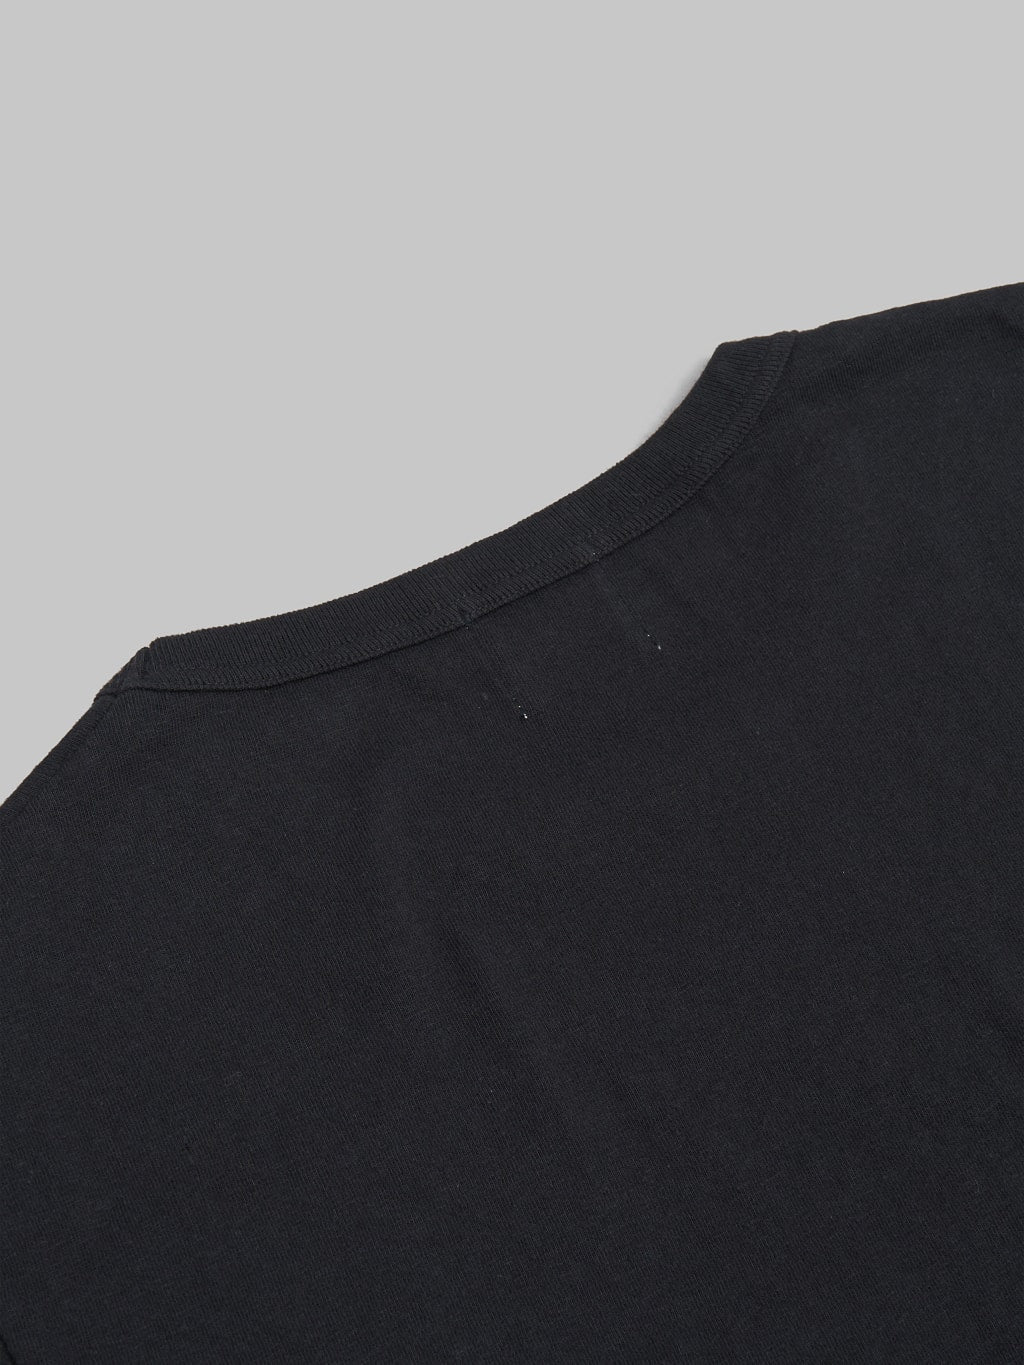 Samurai Jeans SJ2PST-CREW Tubular Black T-Shirt (2 Pack)